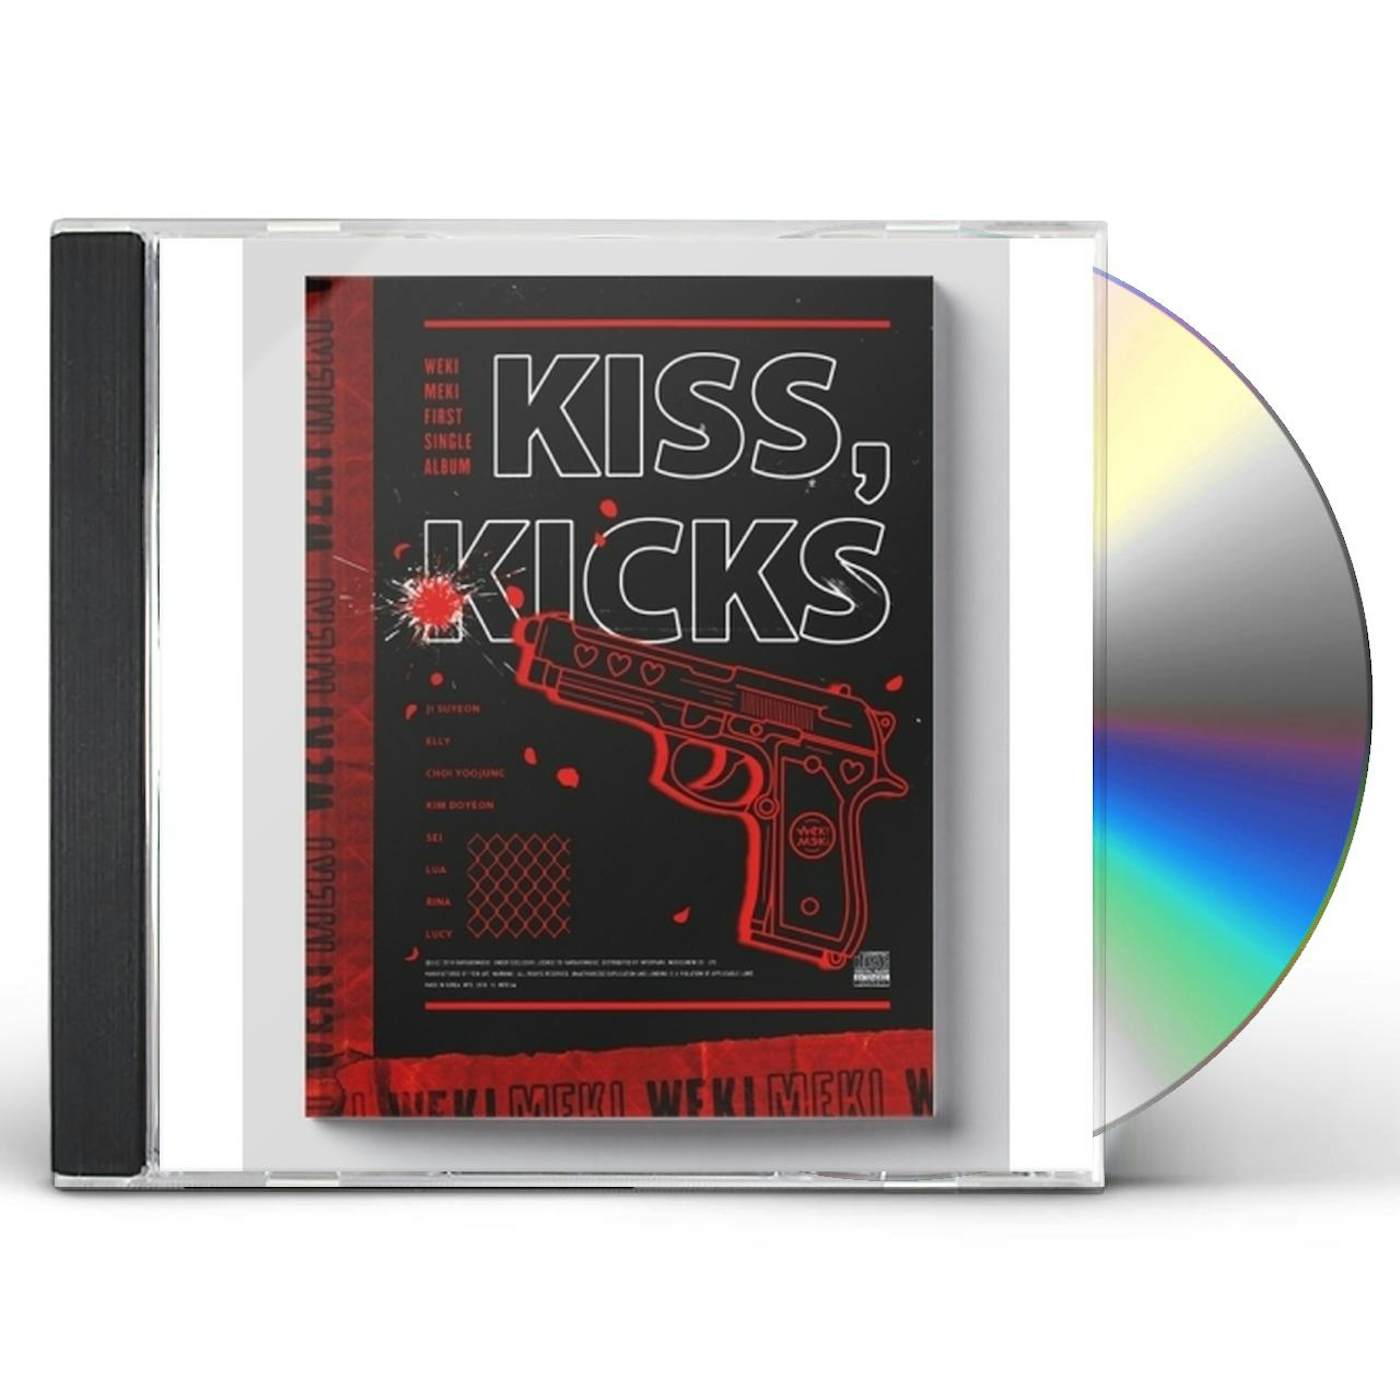 Weki Meki KISS KICKS (KICKS VERSION) CD